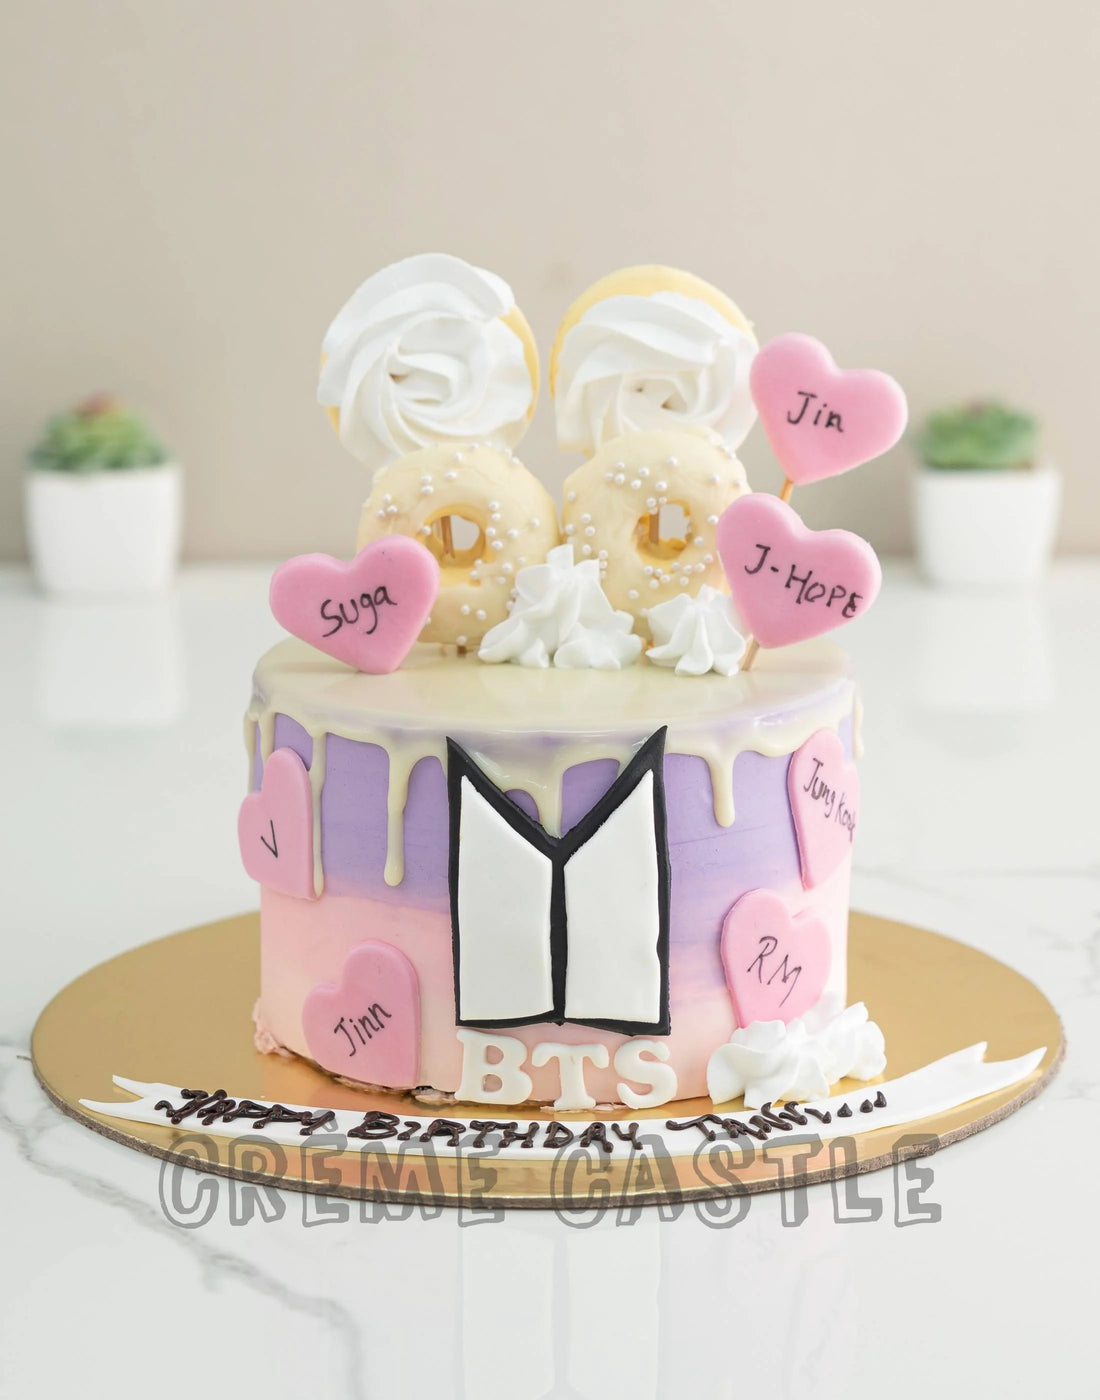 BTS Theme Cake by Creme Castle